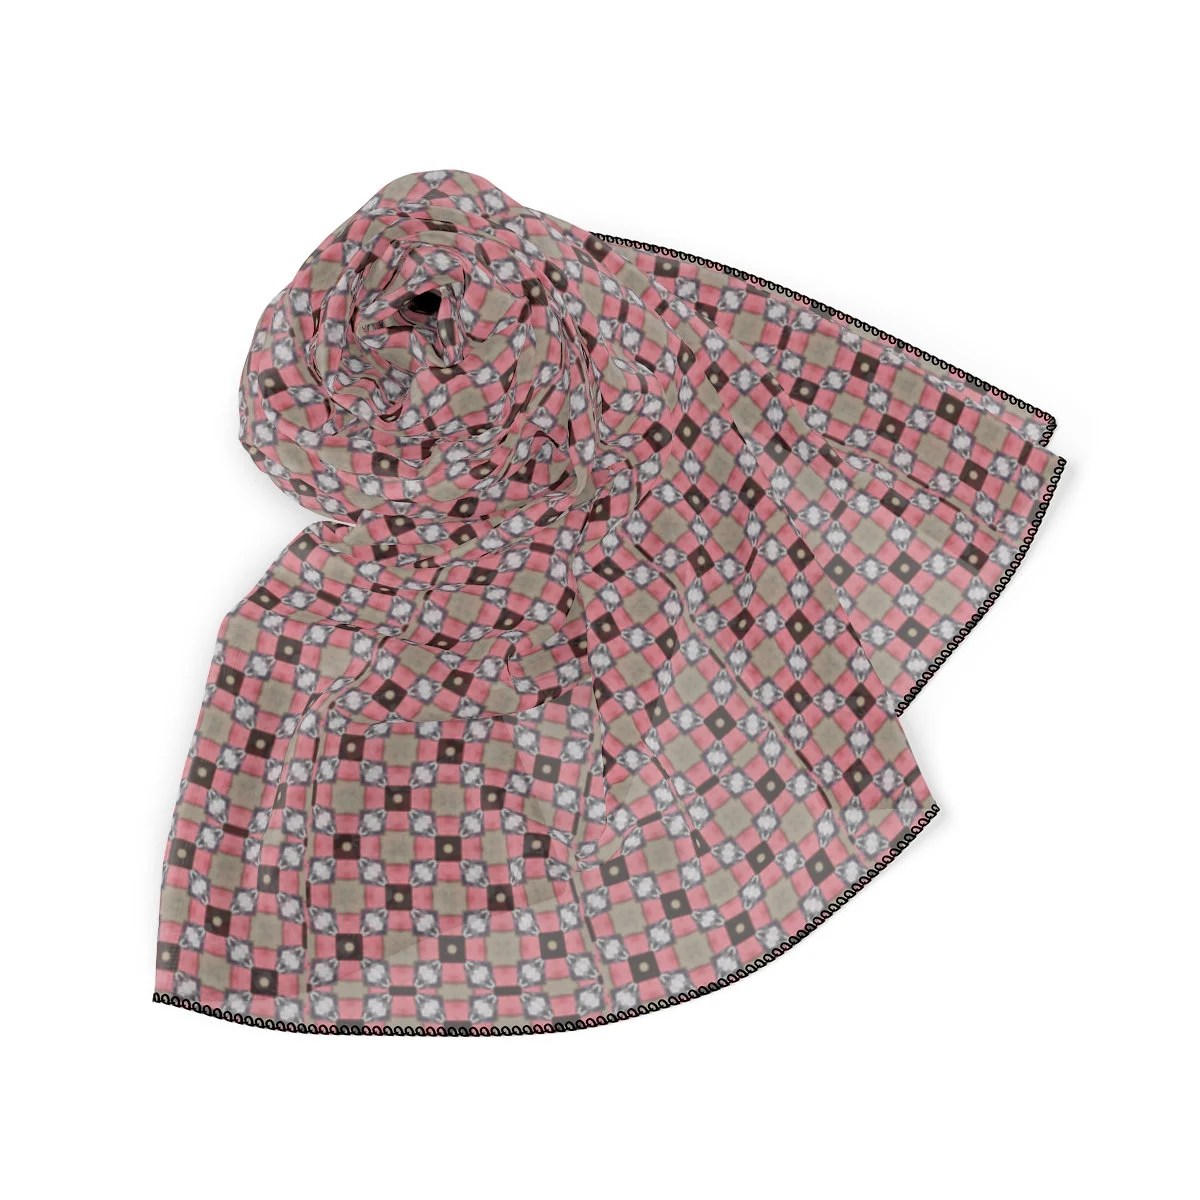 25 Inch Square Scarf Head Wrap or Tie |  | Silky Soft Chiffon Material  | Wear as a Head Wrap, Neck Tie, or Handkerchief